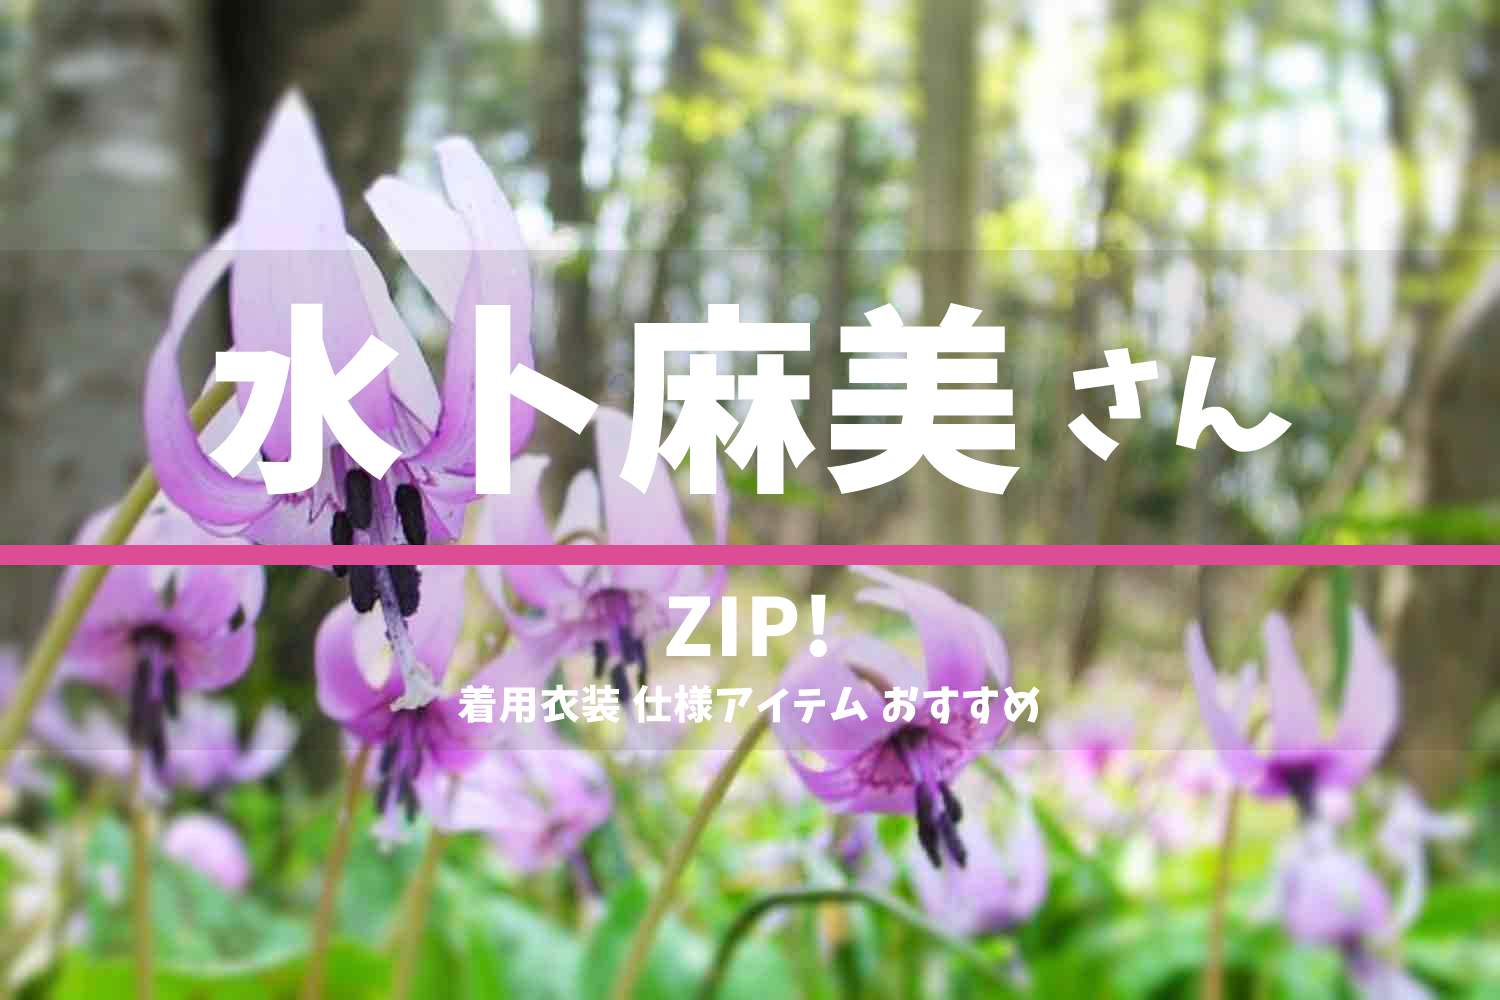 ZIP! 水卜麻美さん 番組 衣装 2022年4月8日放送